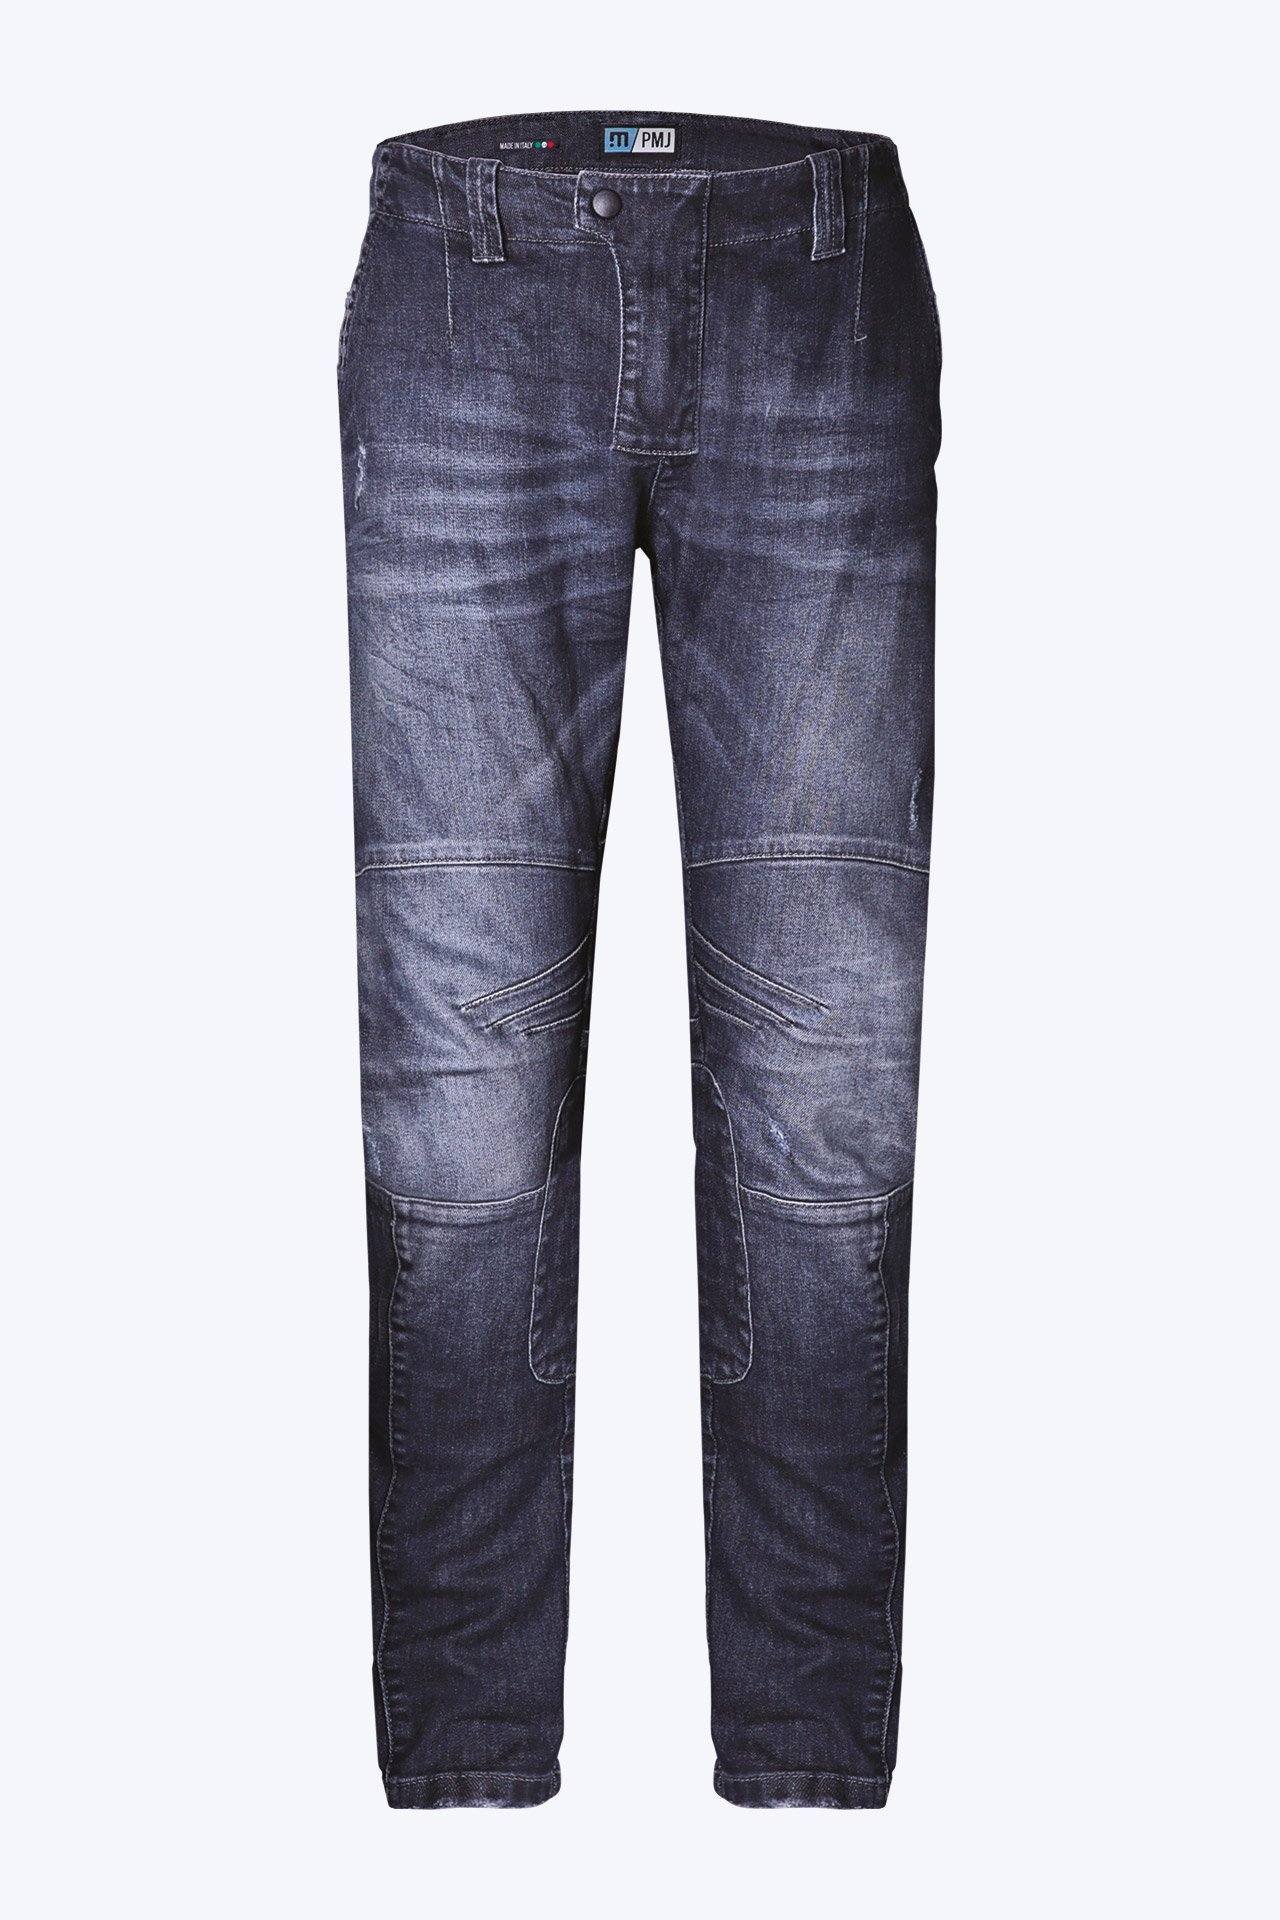 PMJ DAKAR JEANS,jeans, #collections#, -spazio moto- bastia umbra - perugia